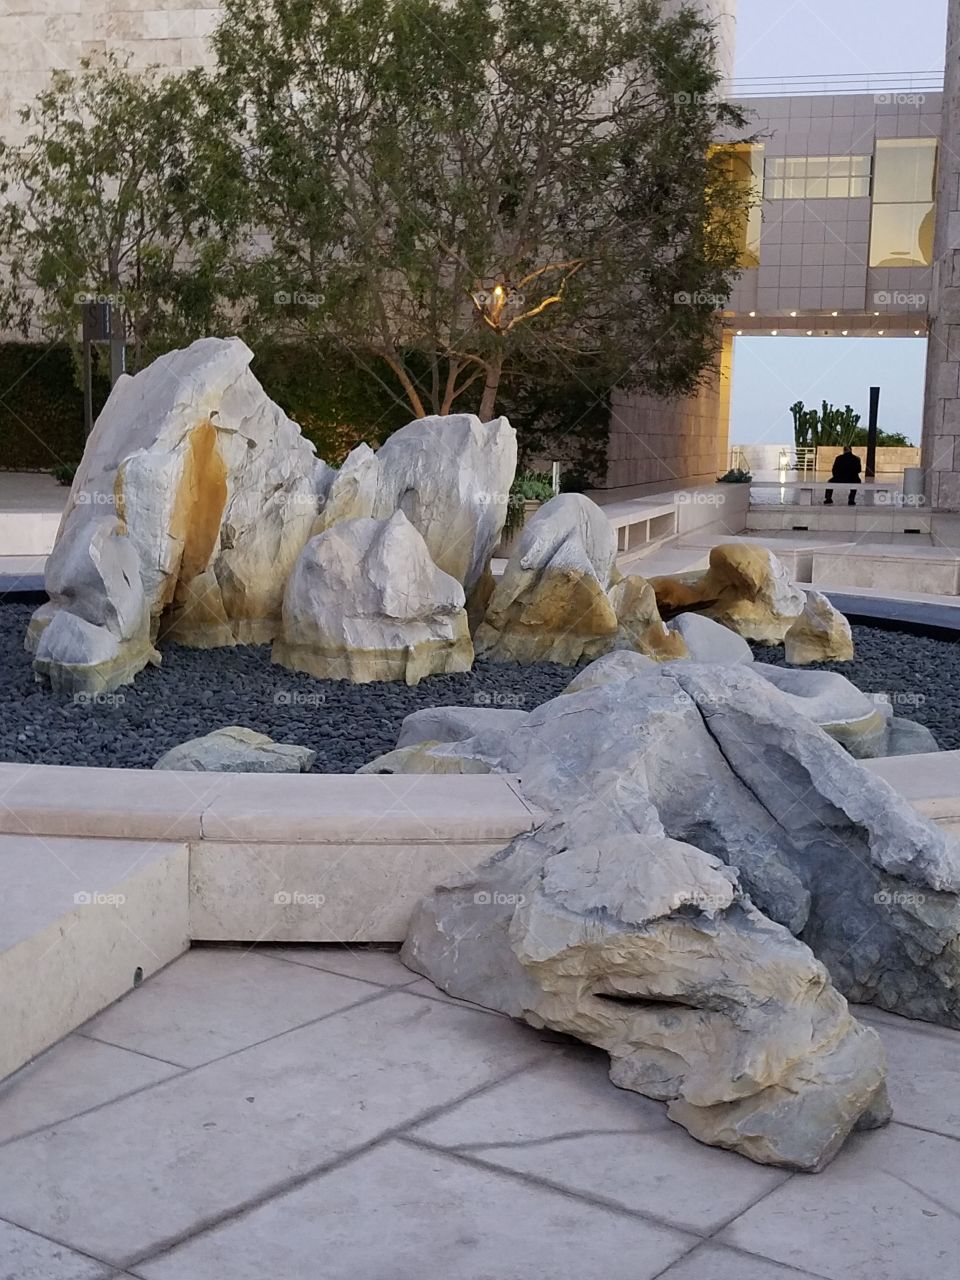 The getty center courtyard rocks